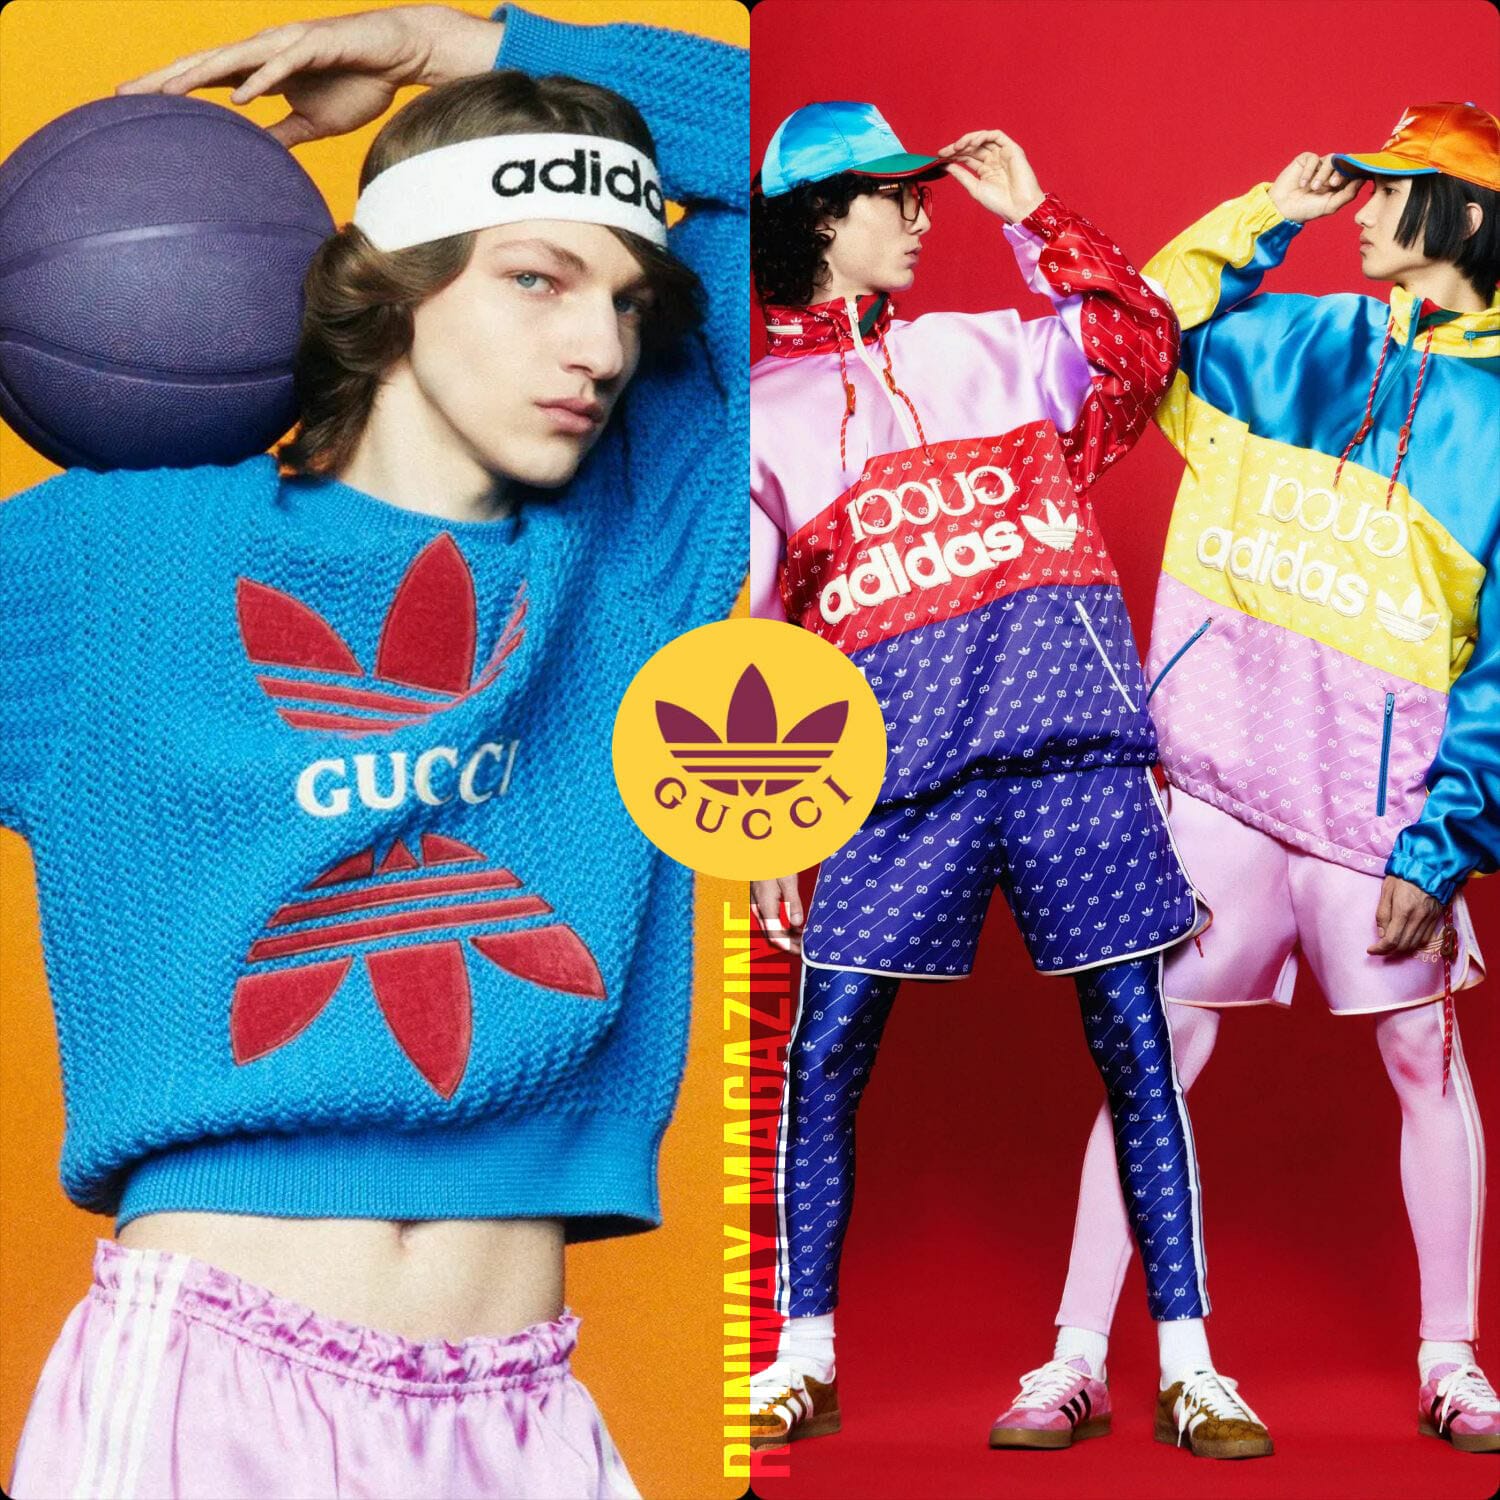 Adidas x Gucci Lookbook - RUNWAY MAGAZINE ® Collections